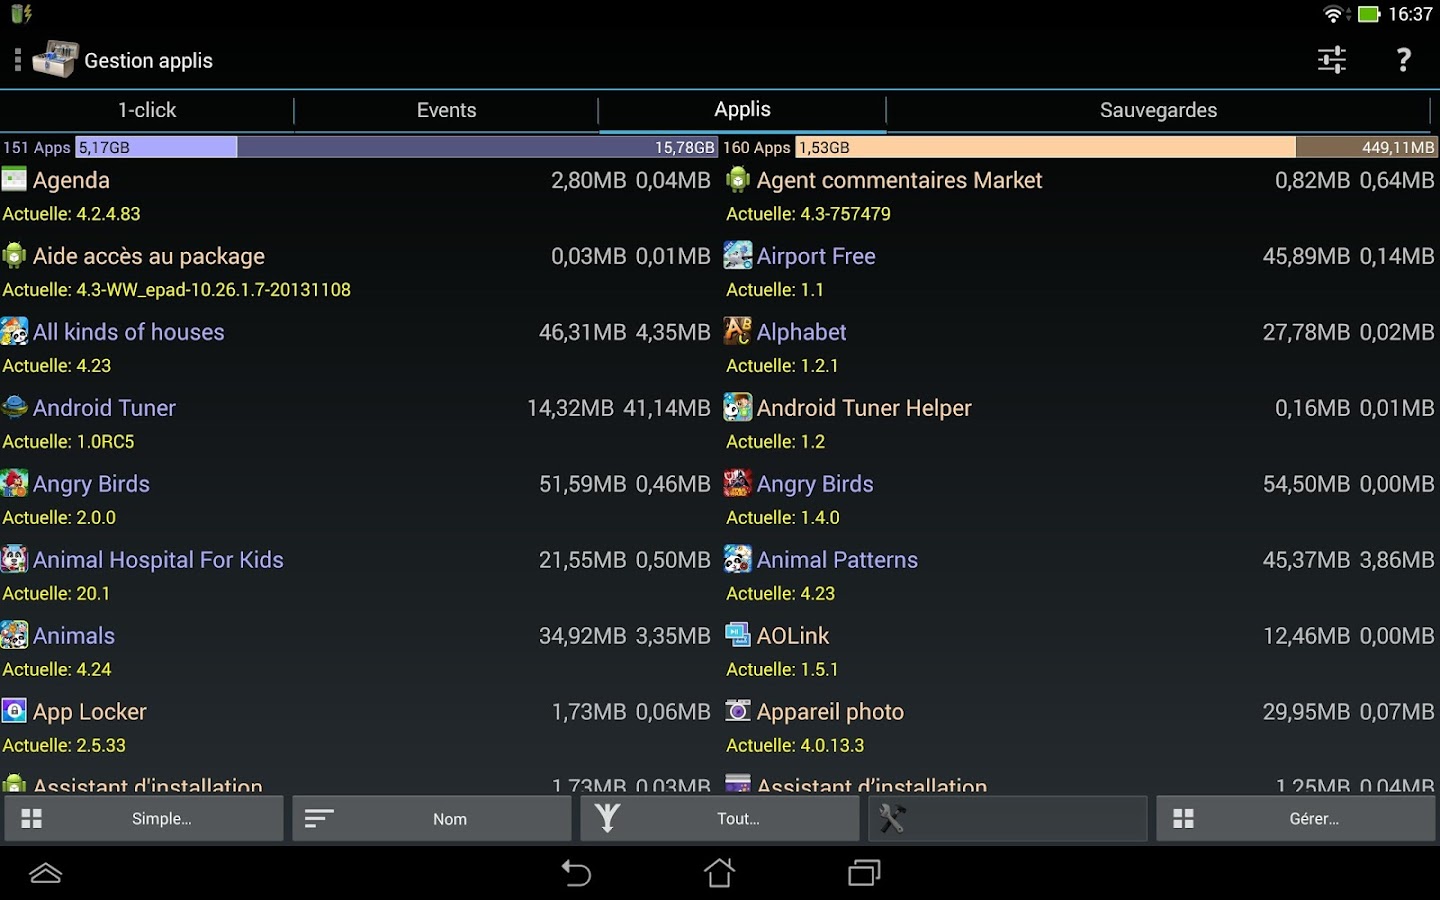 System Tuner Pro - screenshot